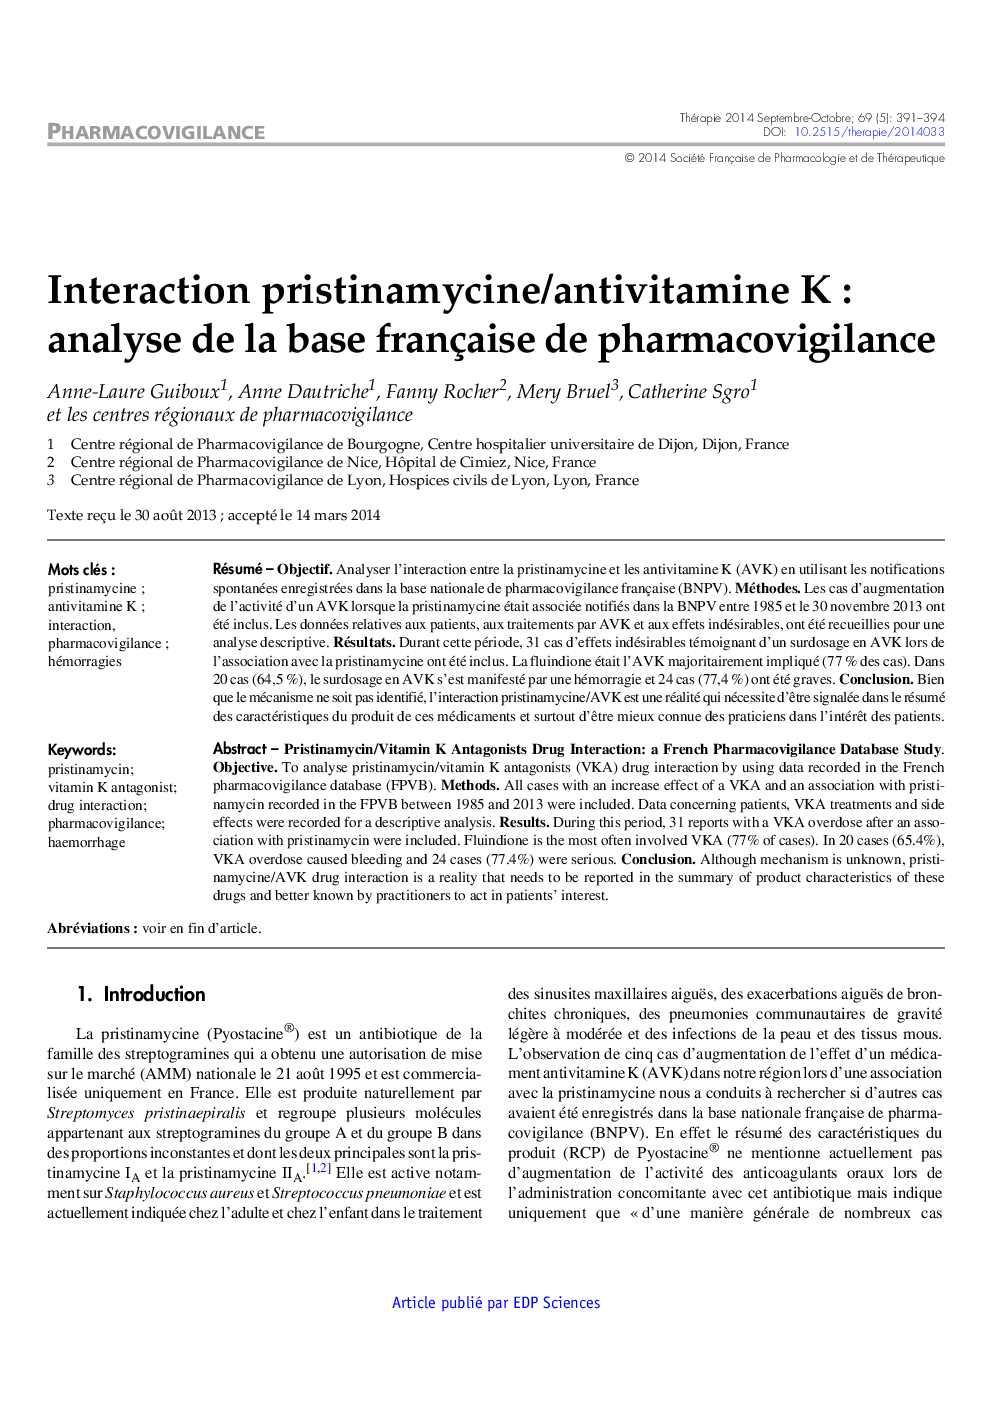 Interaction pristinamycine/antivitamine K : analyse de la base française de pharmacovigilance